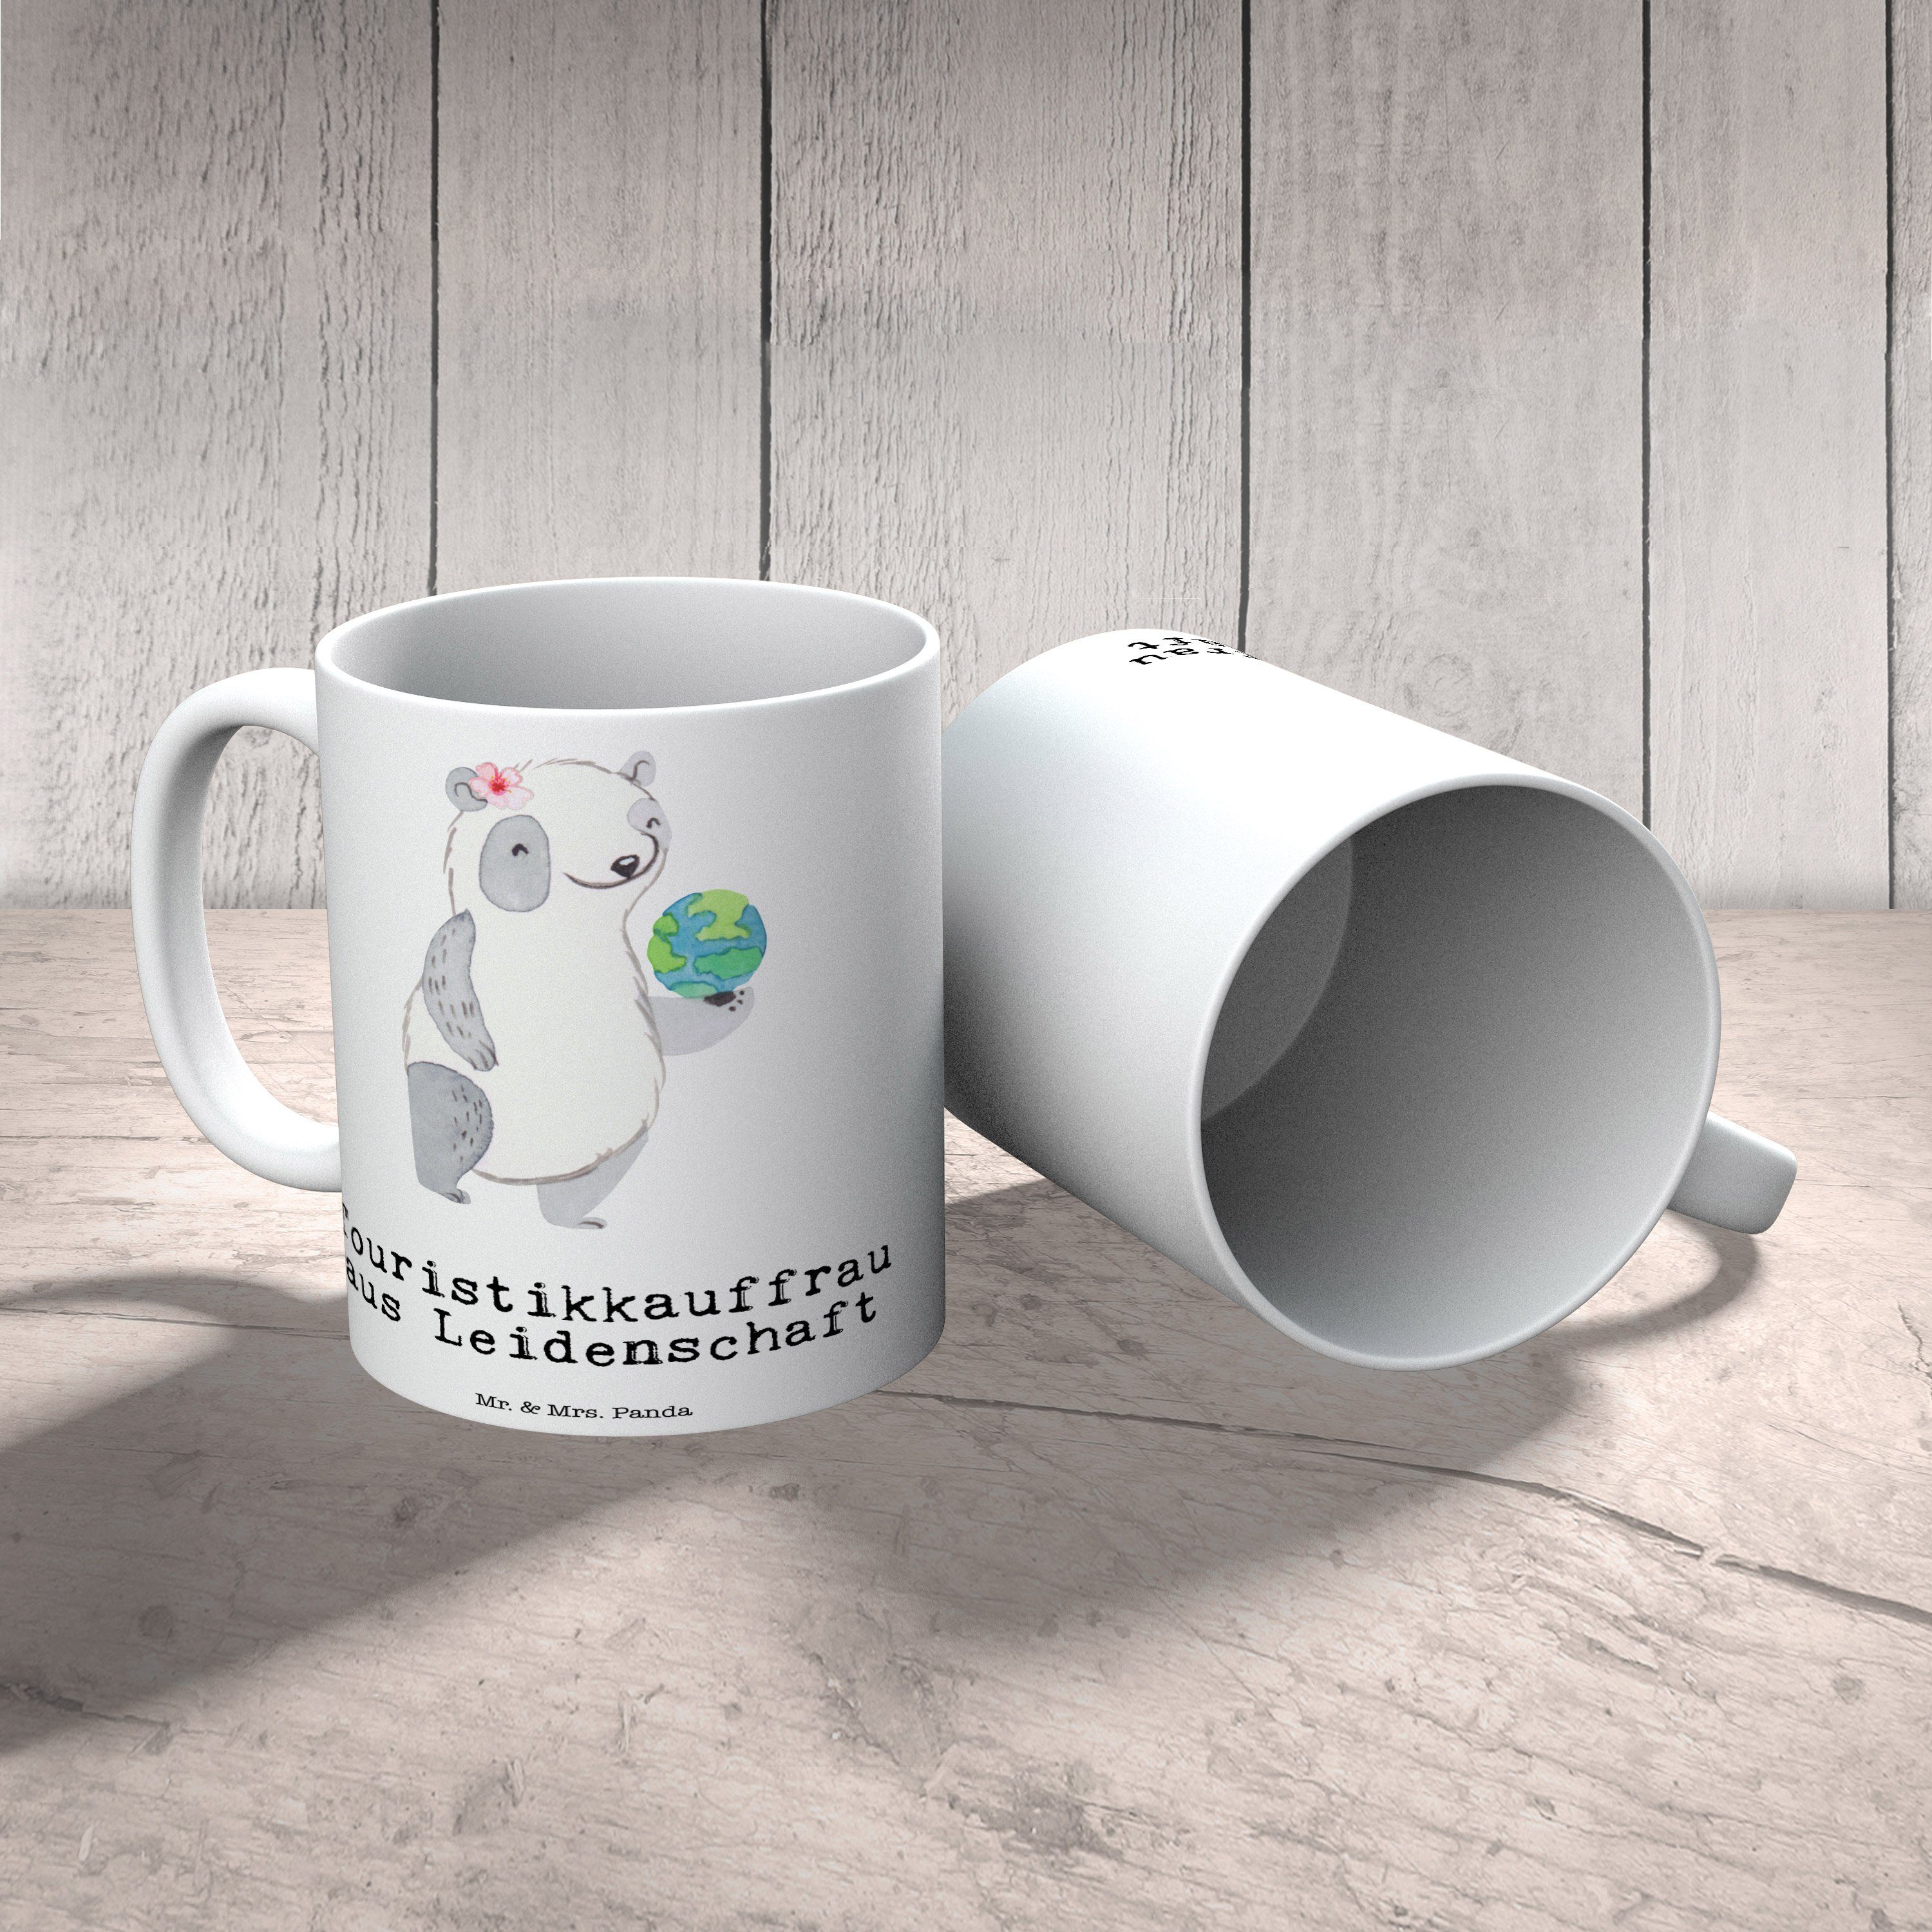 Mr. & - Leidenschaft Kaffe, Tasse Weiß - Geschenk, Panda Mrs. Touristikkauffrau Keramik aus Teetasse